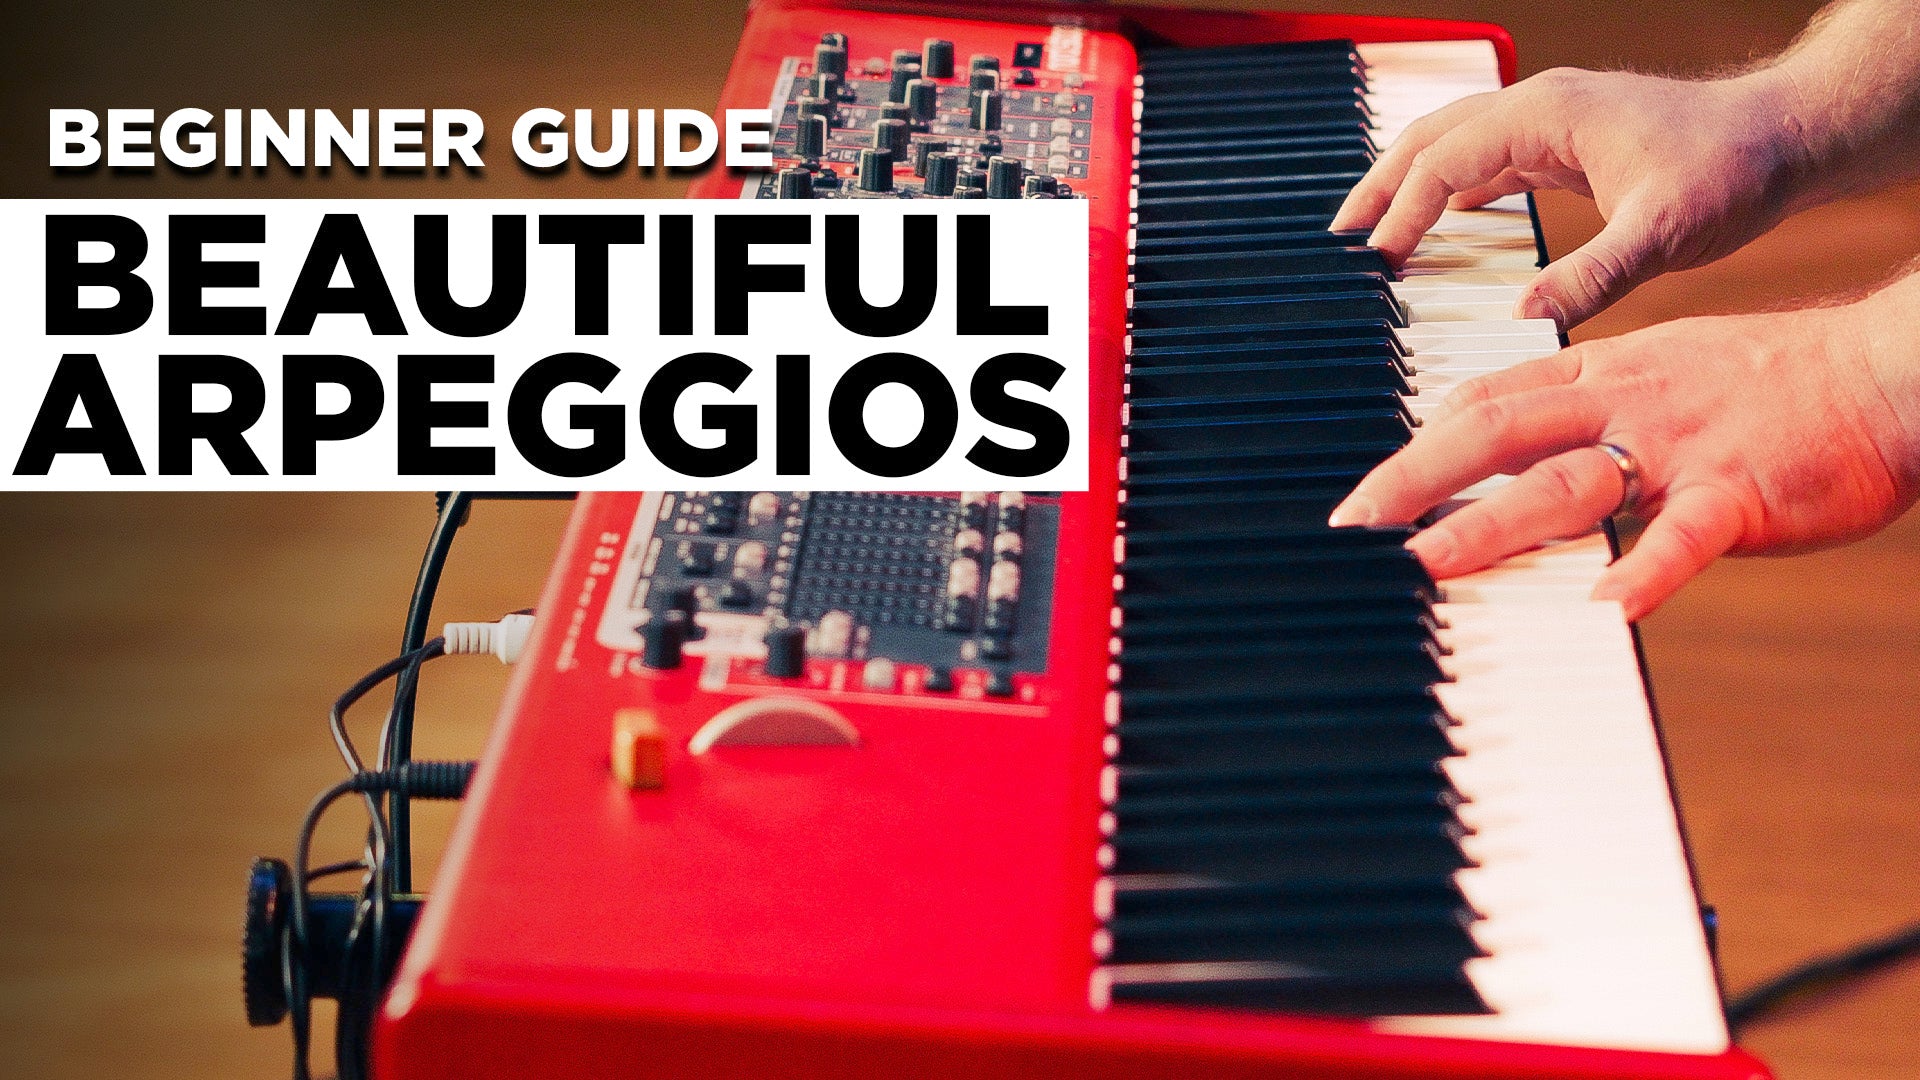 Beginner's Guide to Playing Worship Piano - Beautiful Arpeggios